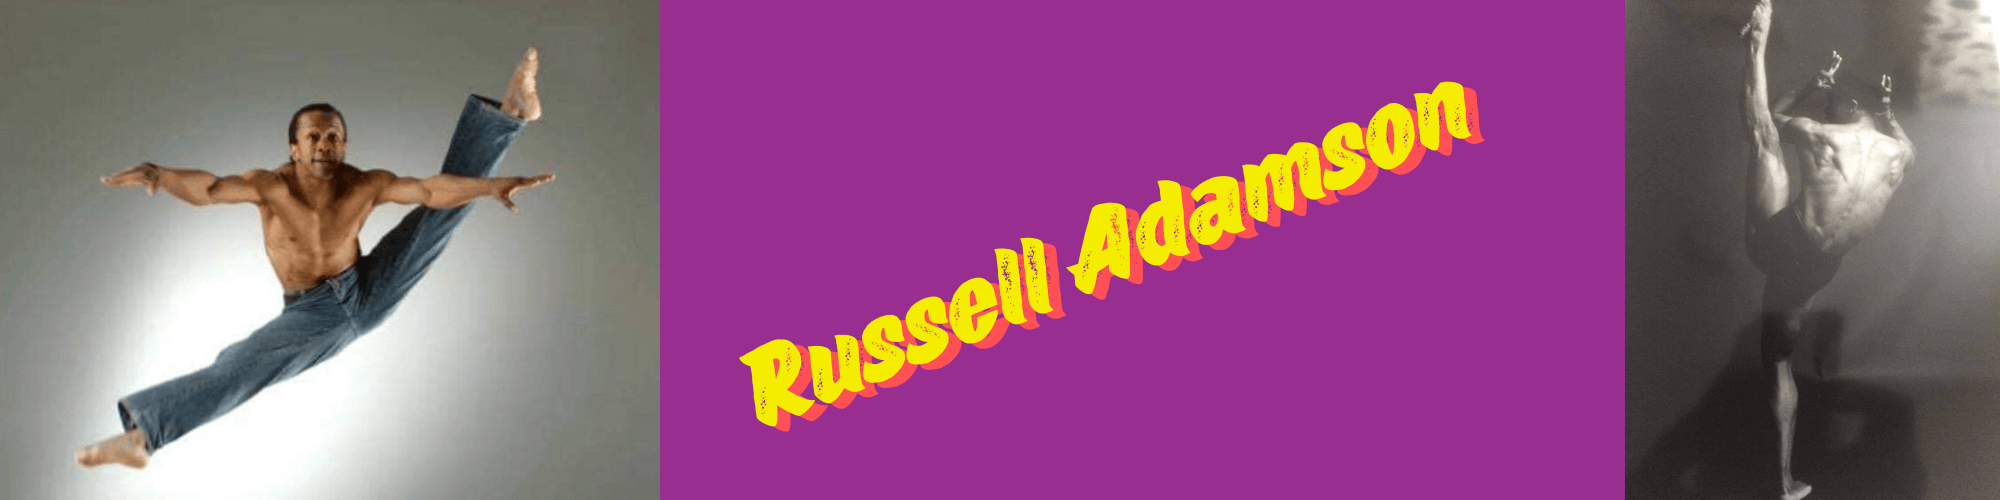 Russell Adamson 2 1